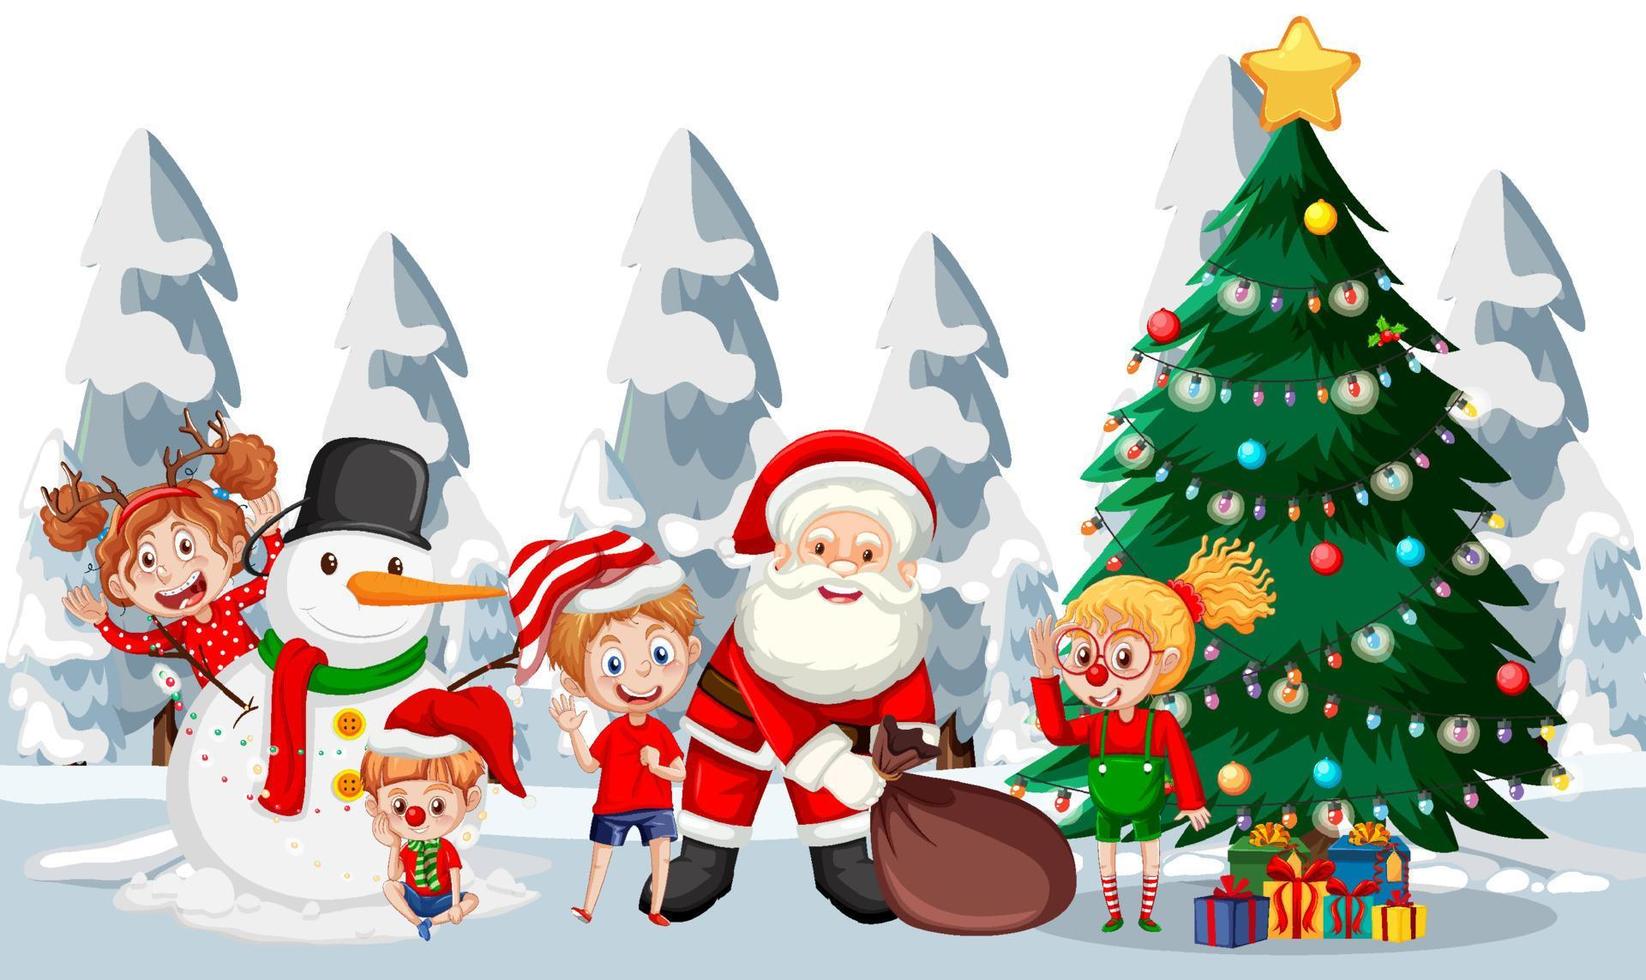 Santa Claus and children celebrating Christmas vector